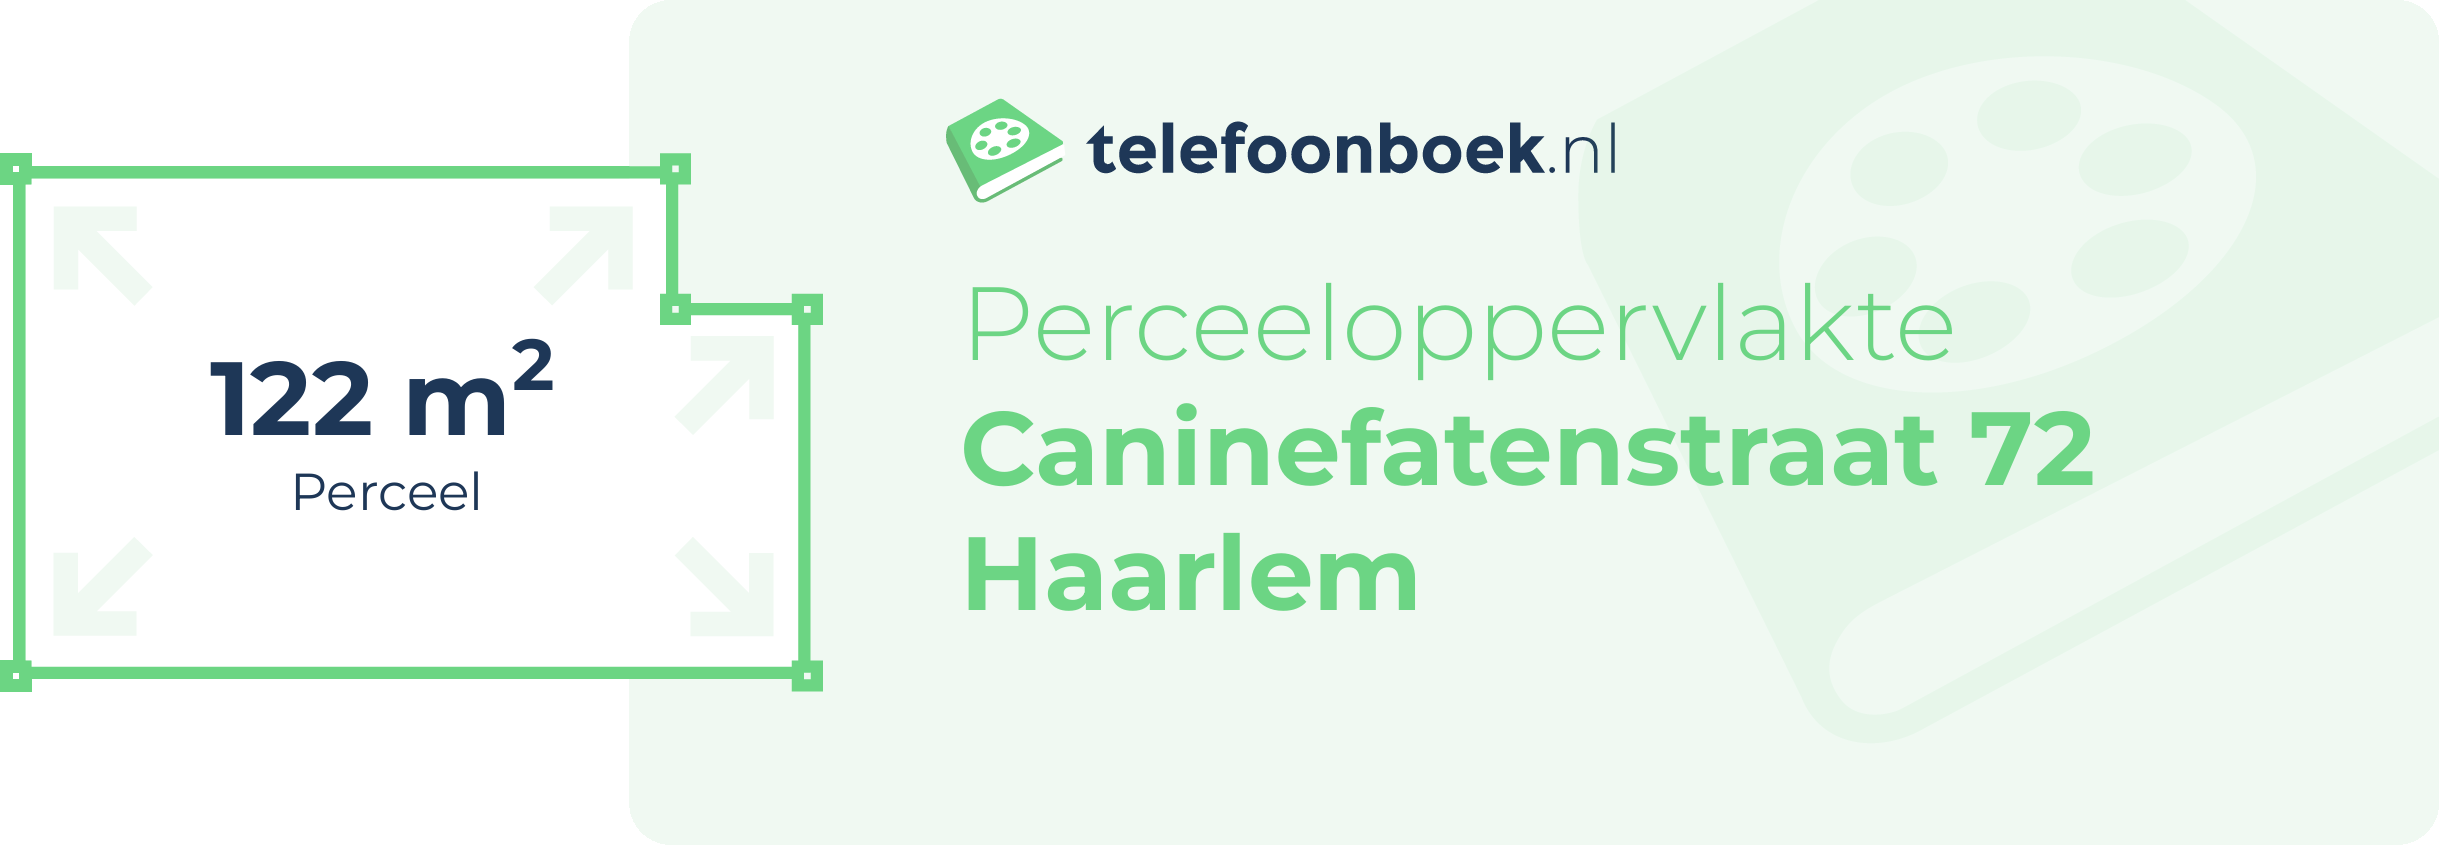 Perceeloppervlakte Caninefatenstraat 72 Haarlem